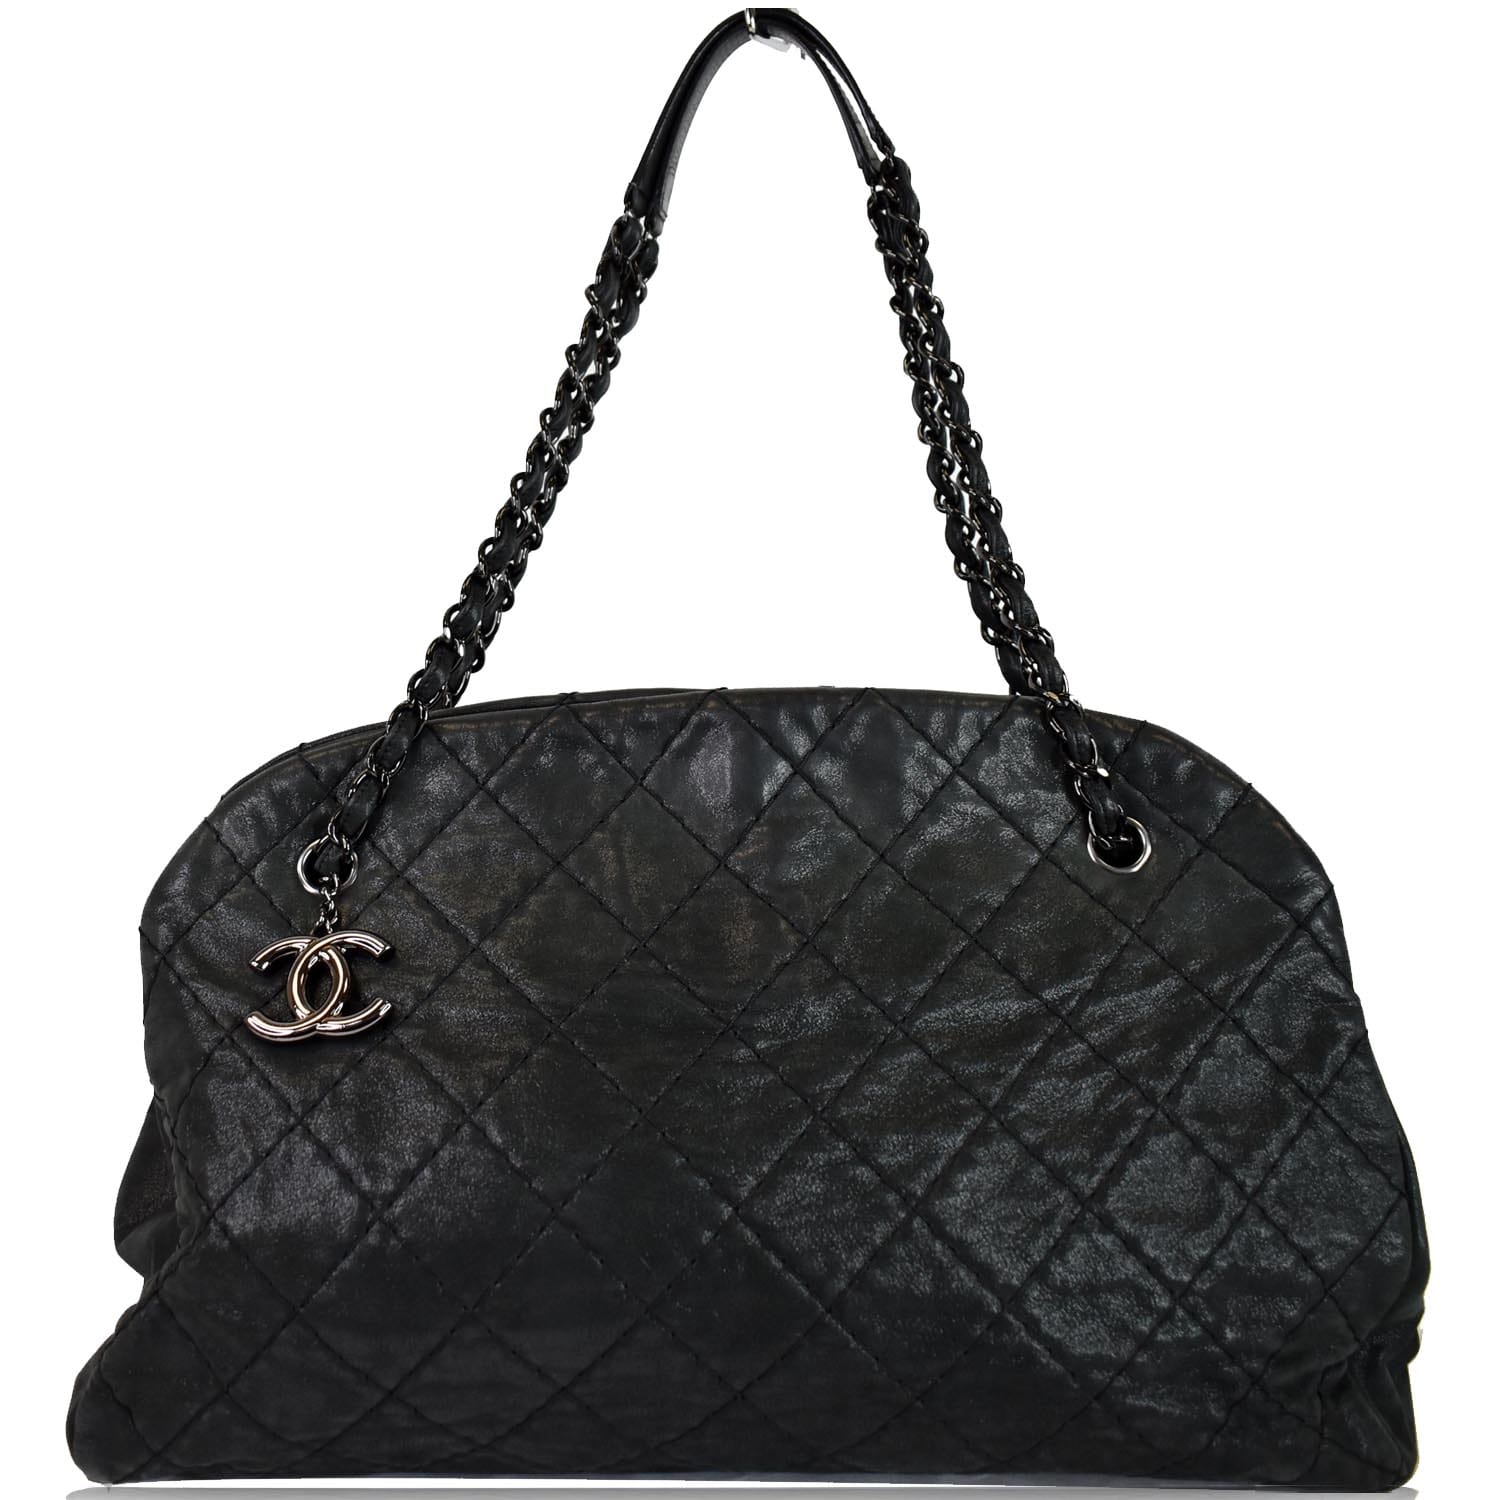 Chanel Mademoiselle Handbag 391556